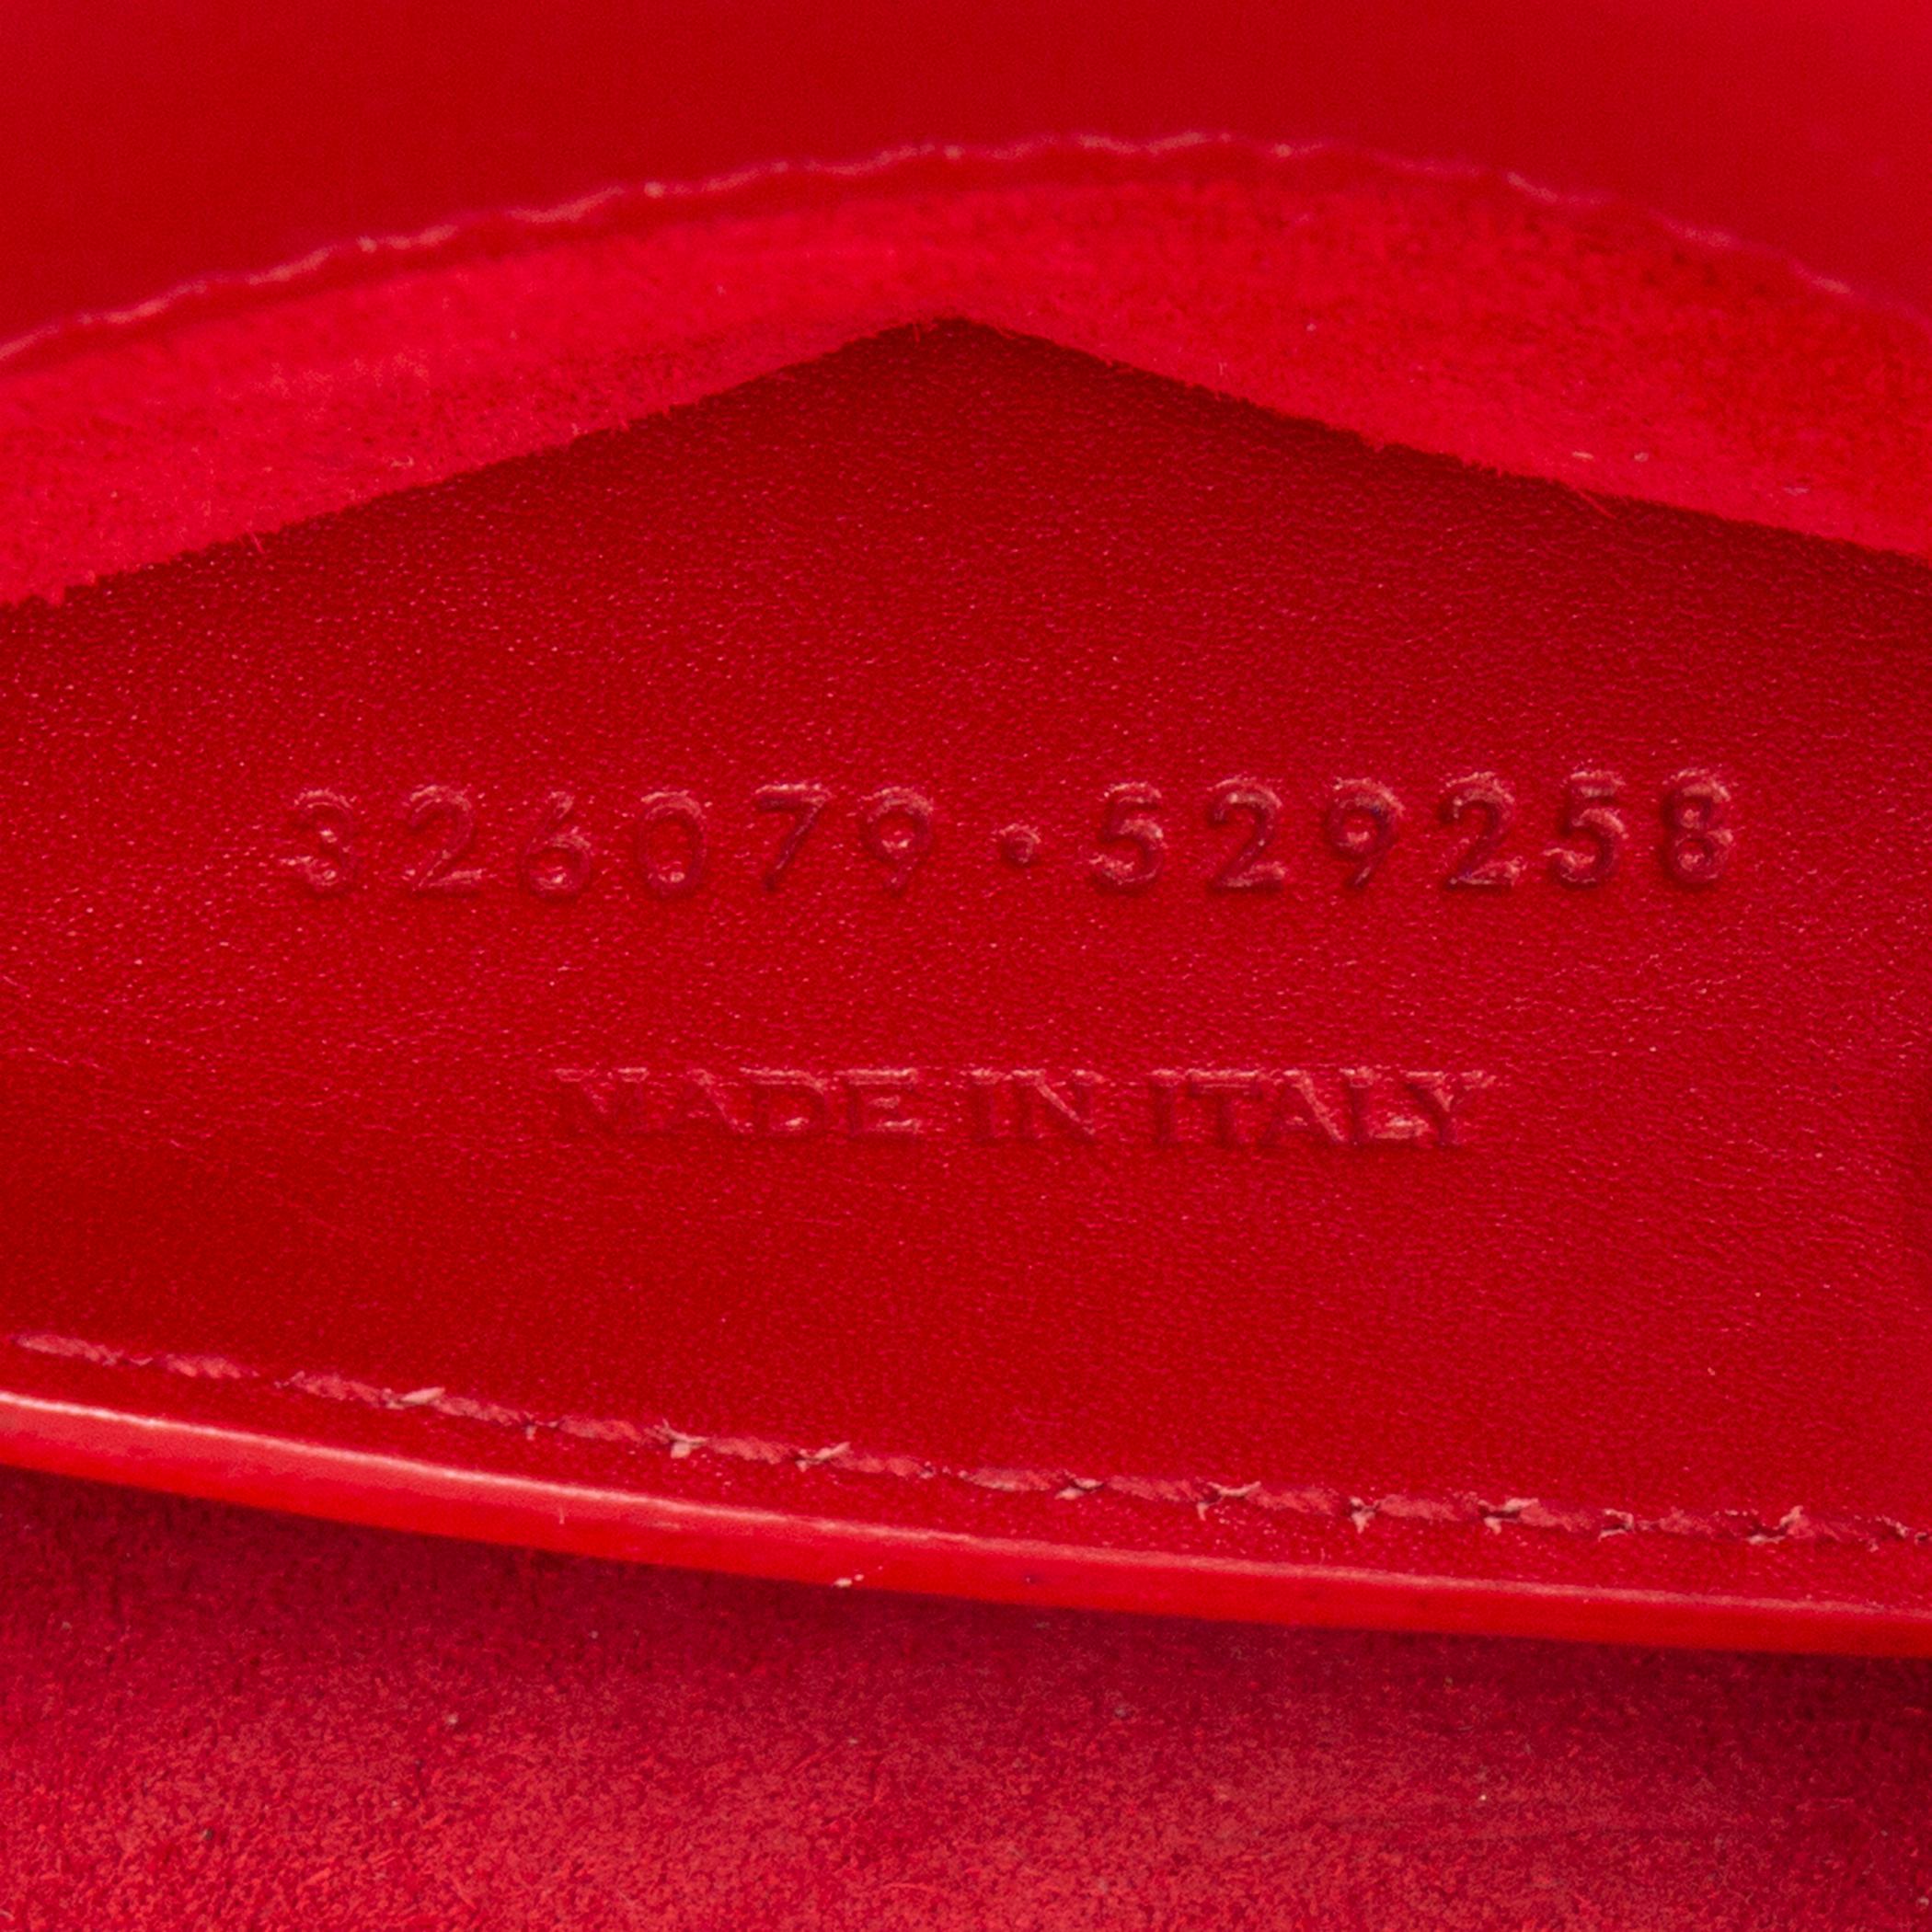 SAINT LAURENT red leather KATE FLAP Clutch Bag 2